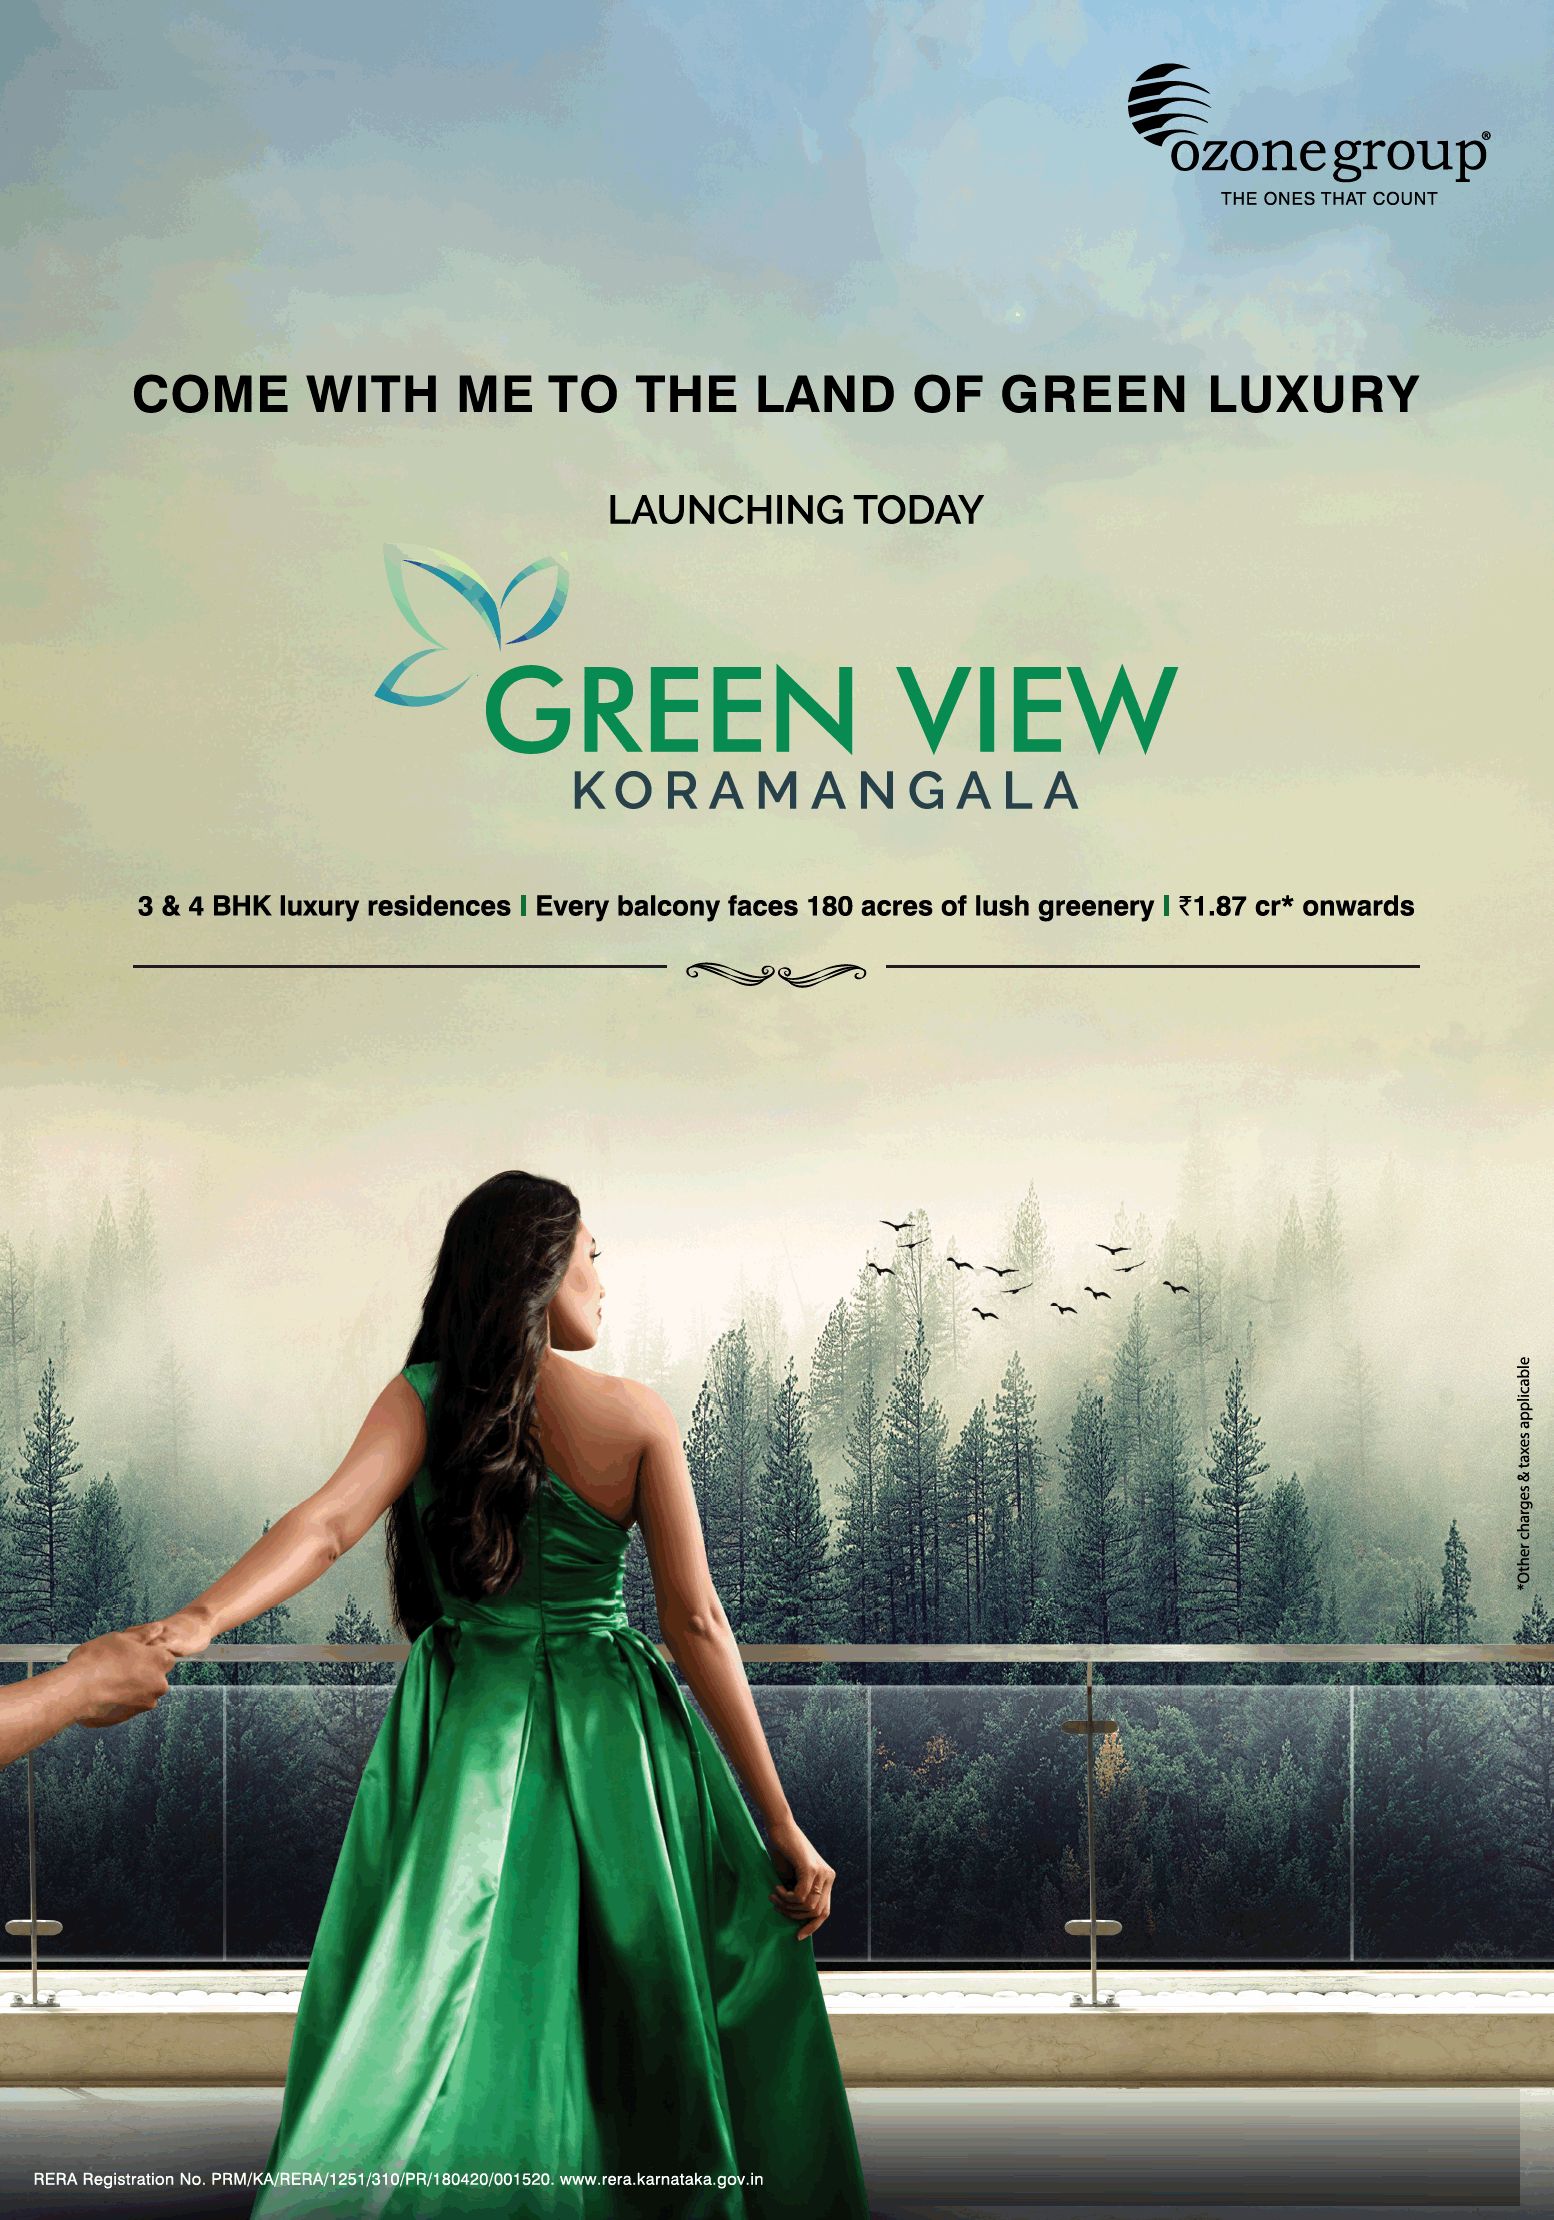 Book 3/4 bhk luxury residences Rs 1.87 cr at Ozone Green View  in Koramangala, Bangalore Update